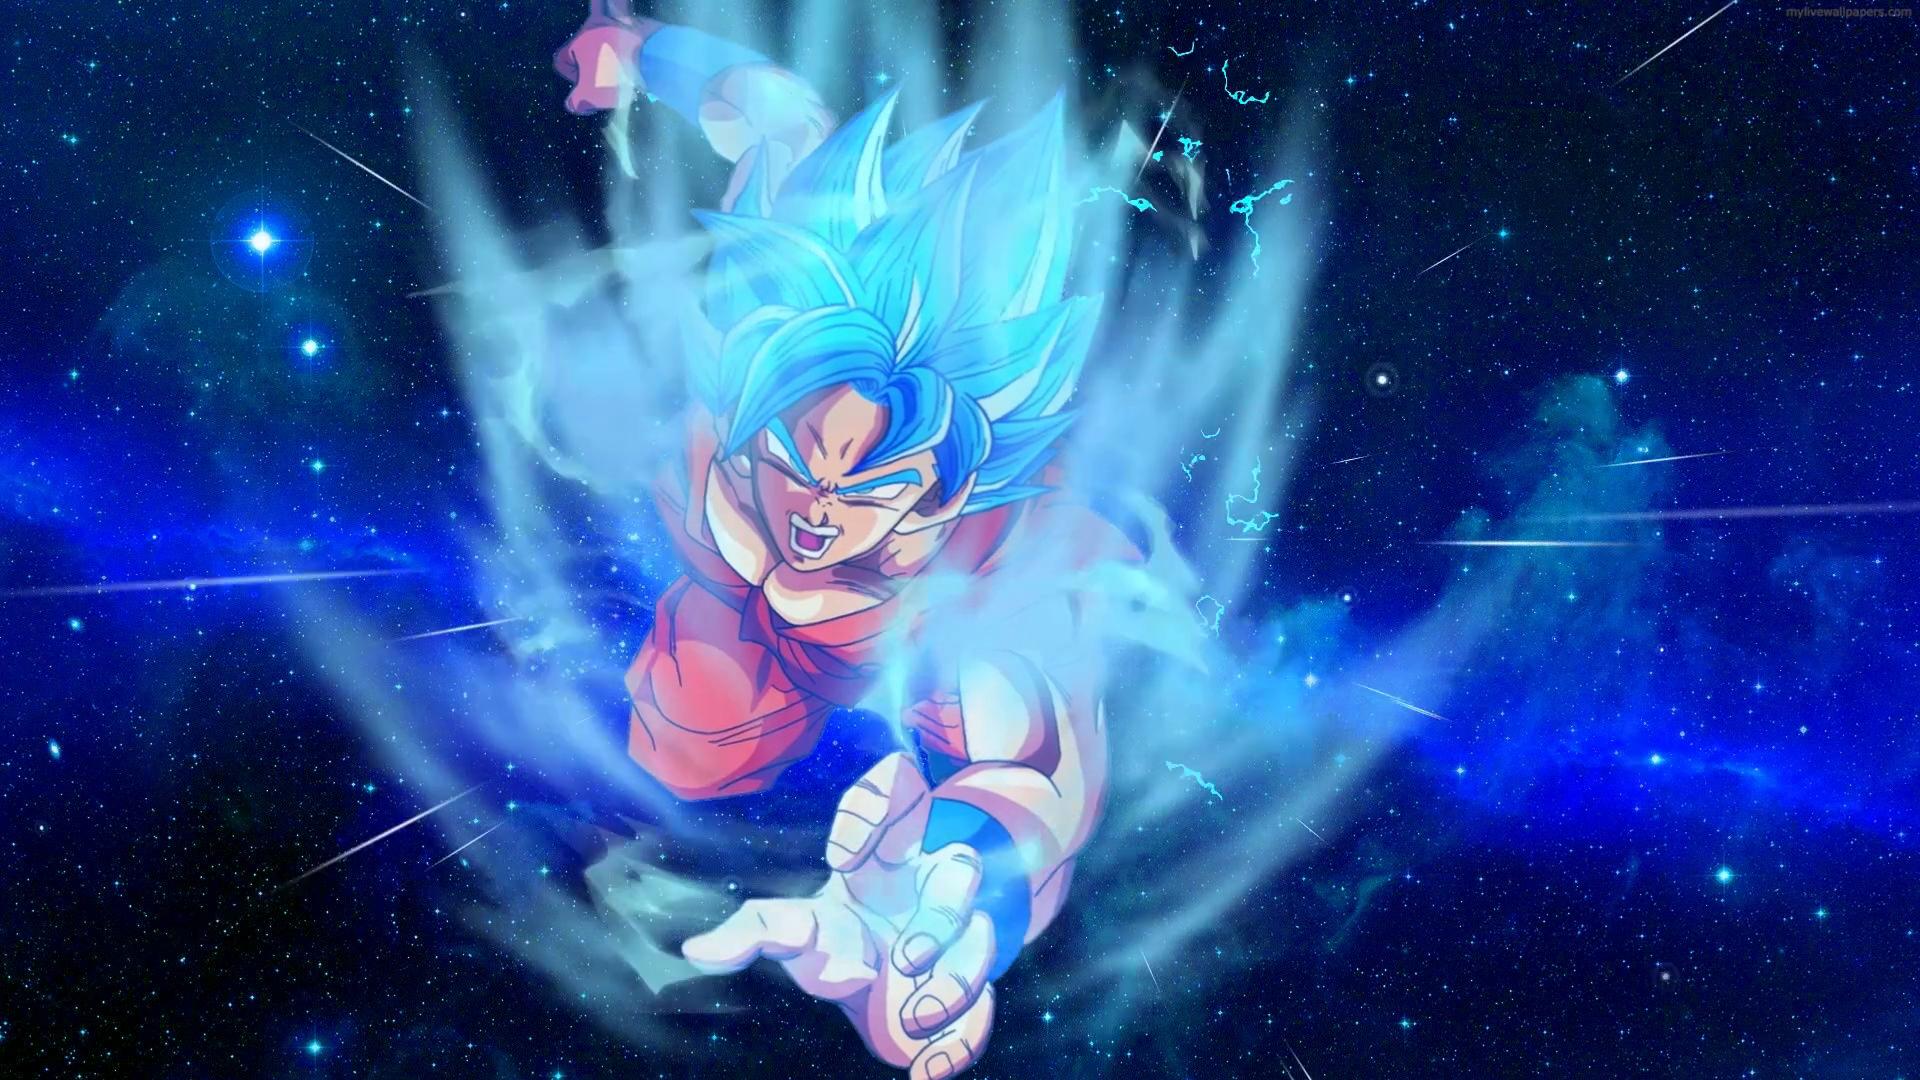 Super Saiyan Blue Goku from Dragon Ball Super Dragon Ball Legends Arts  for Desktop 4K wallpaper download